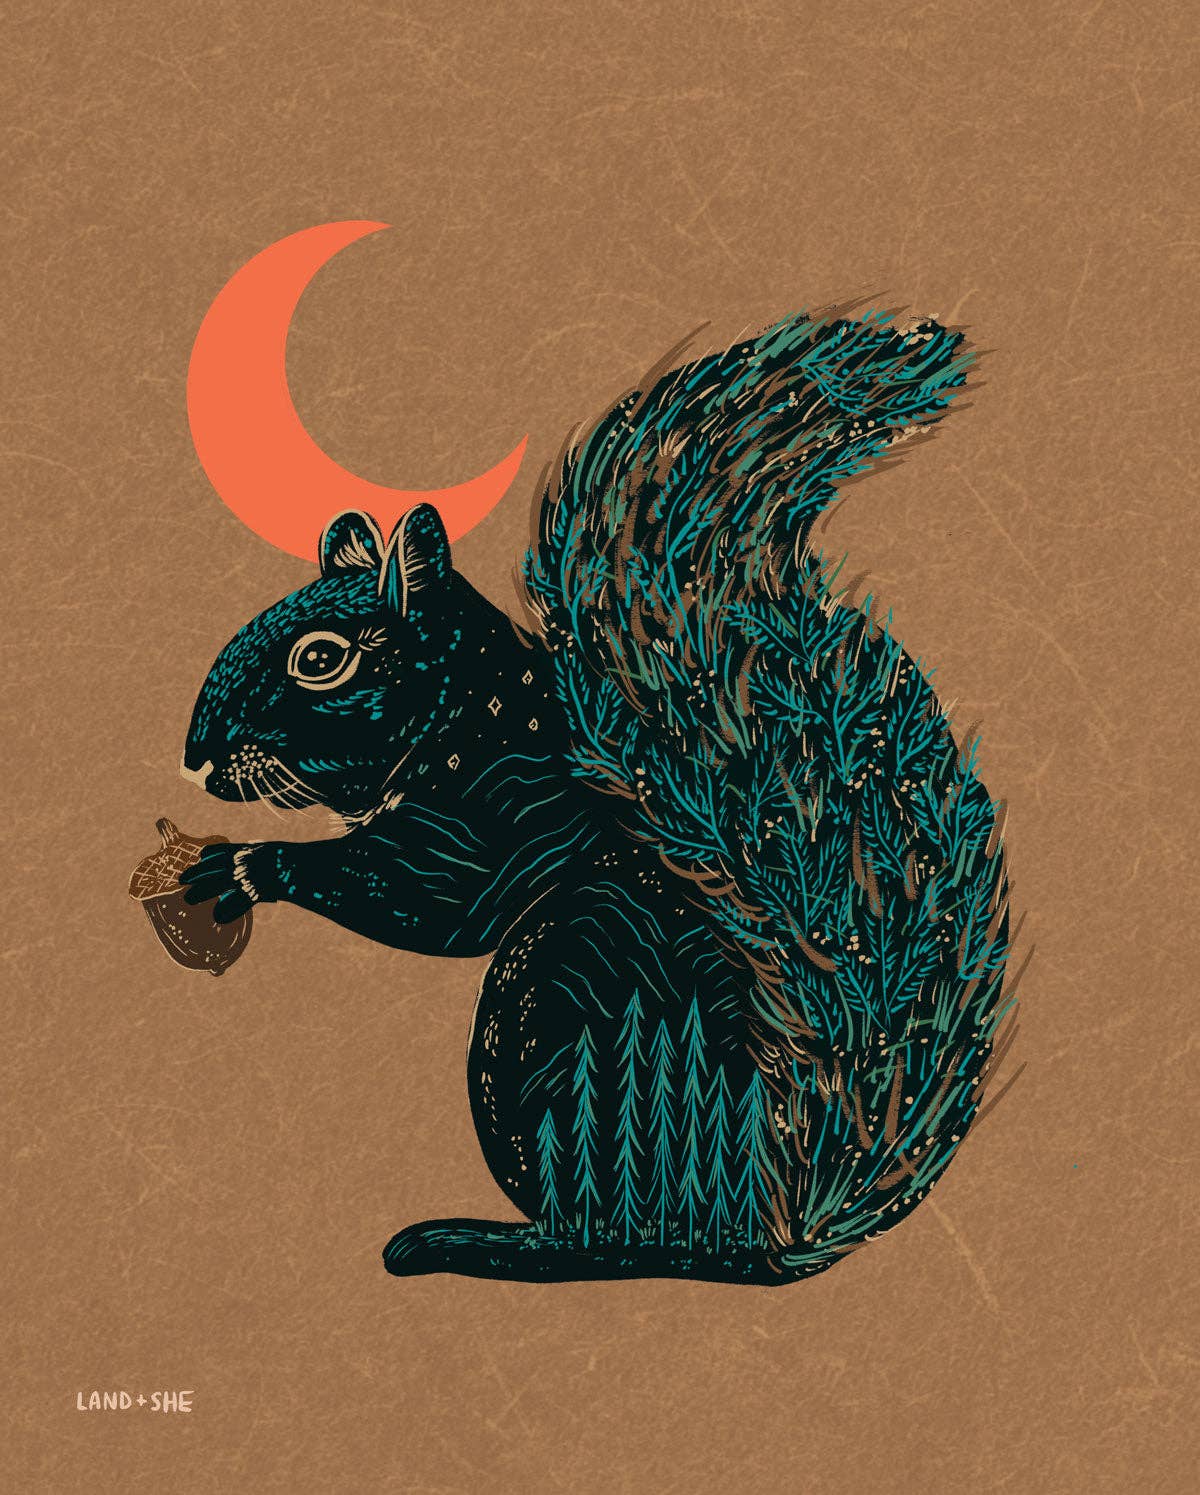 8" x 10" Winter Squirrel Print